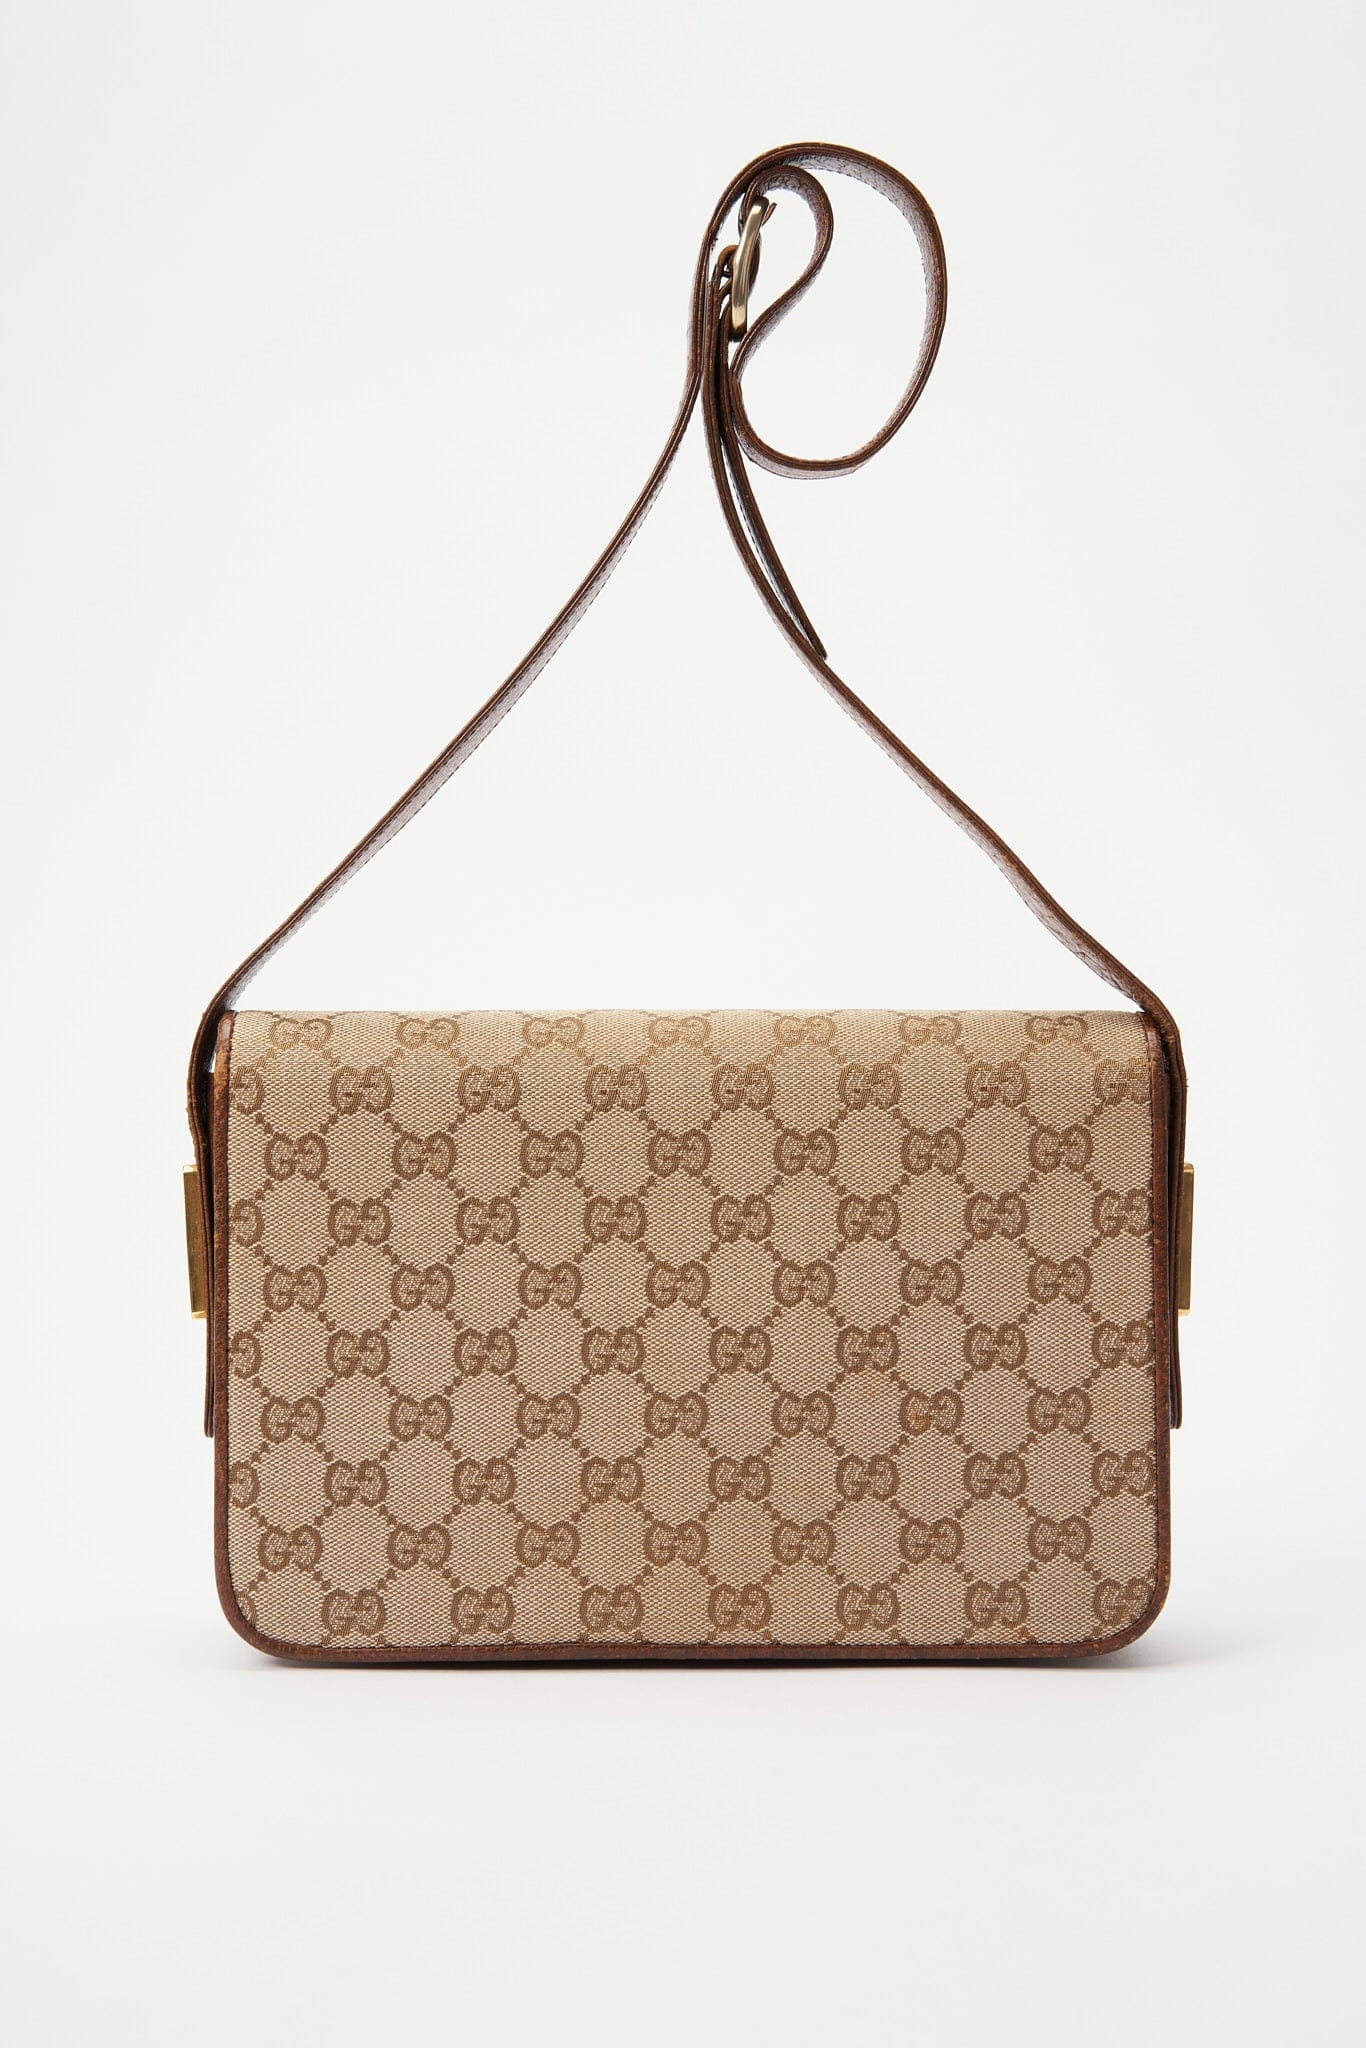 Gucci, Bags, Vintage Gucci Messenger Bag